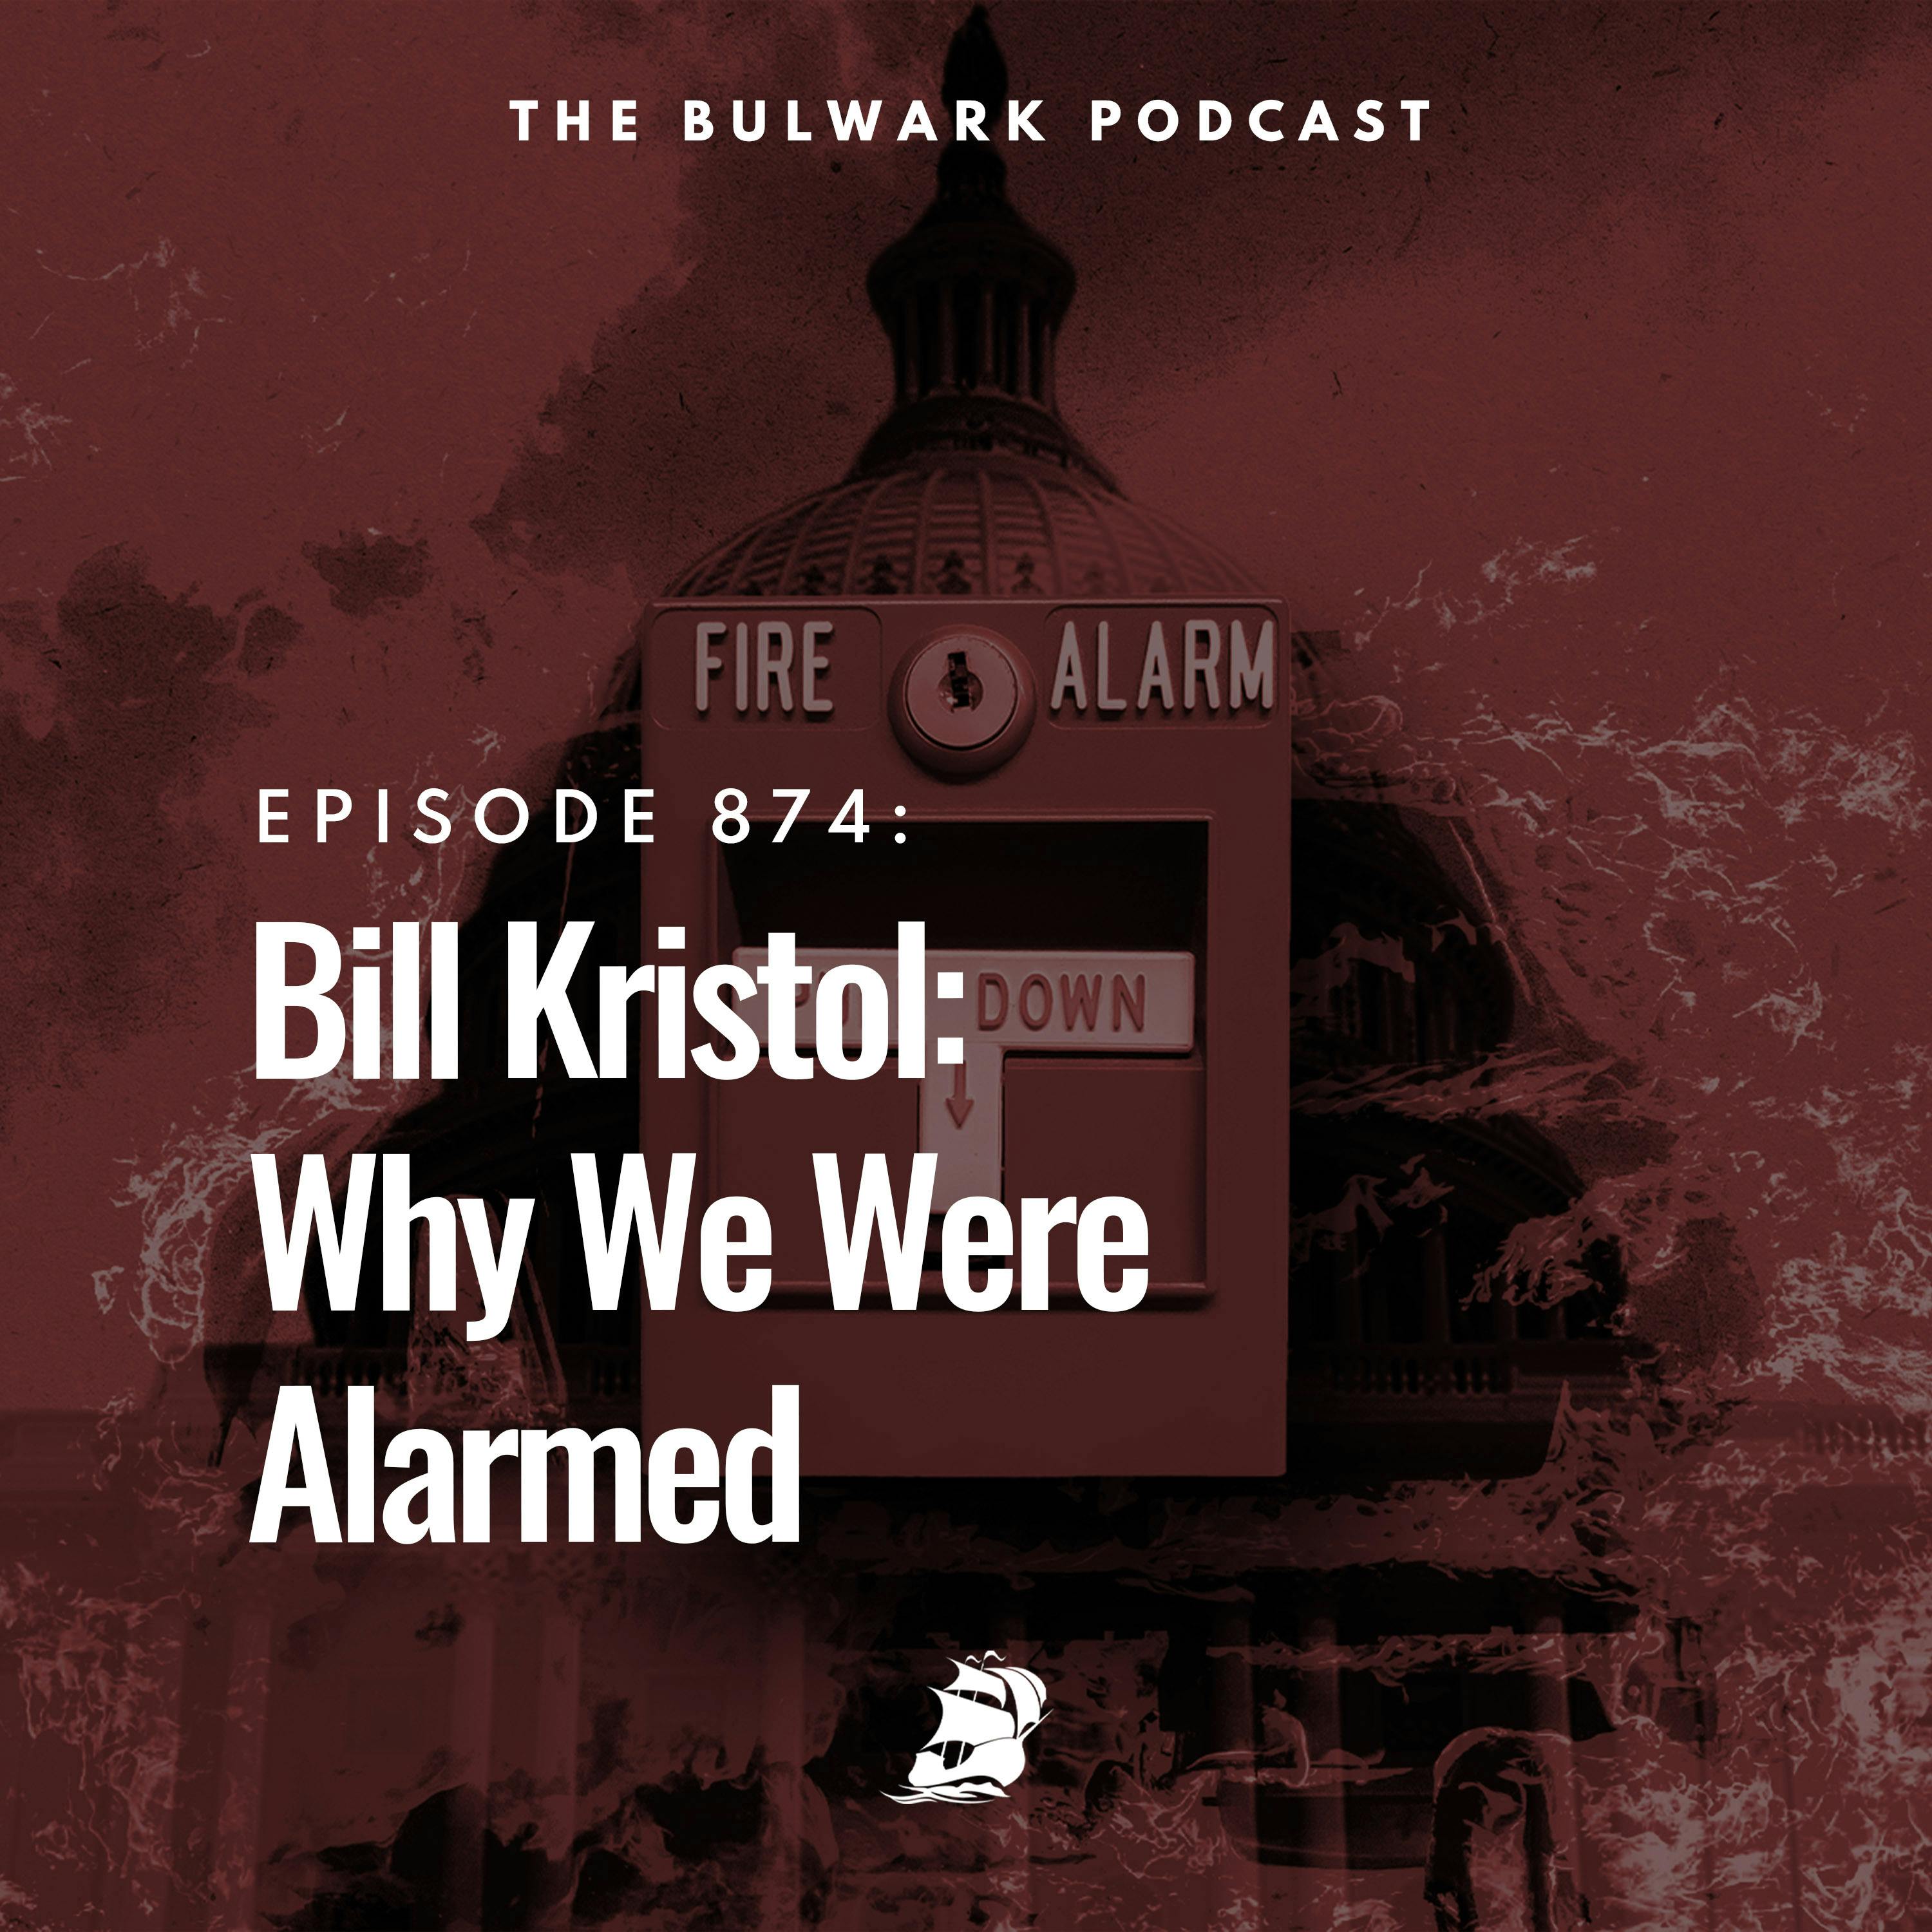 Bill Kristol: Why We Were Alarmed